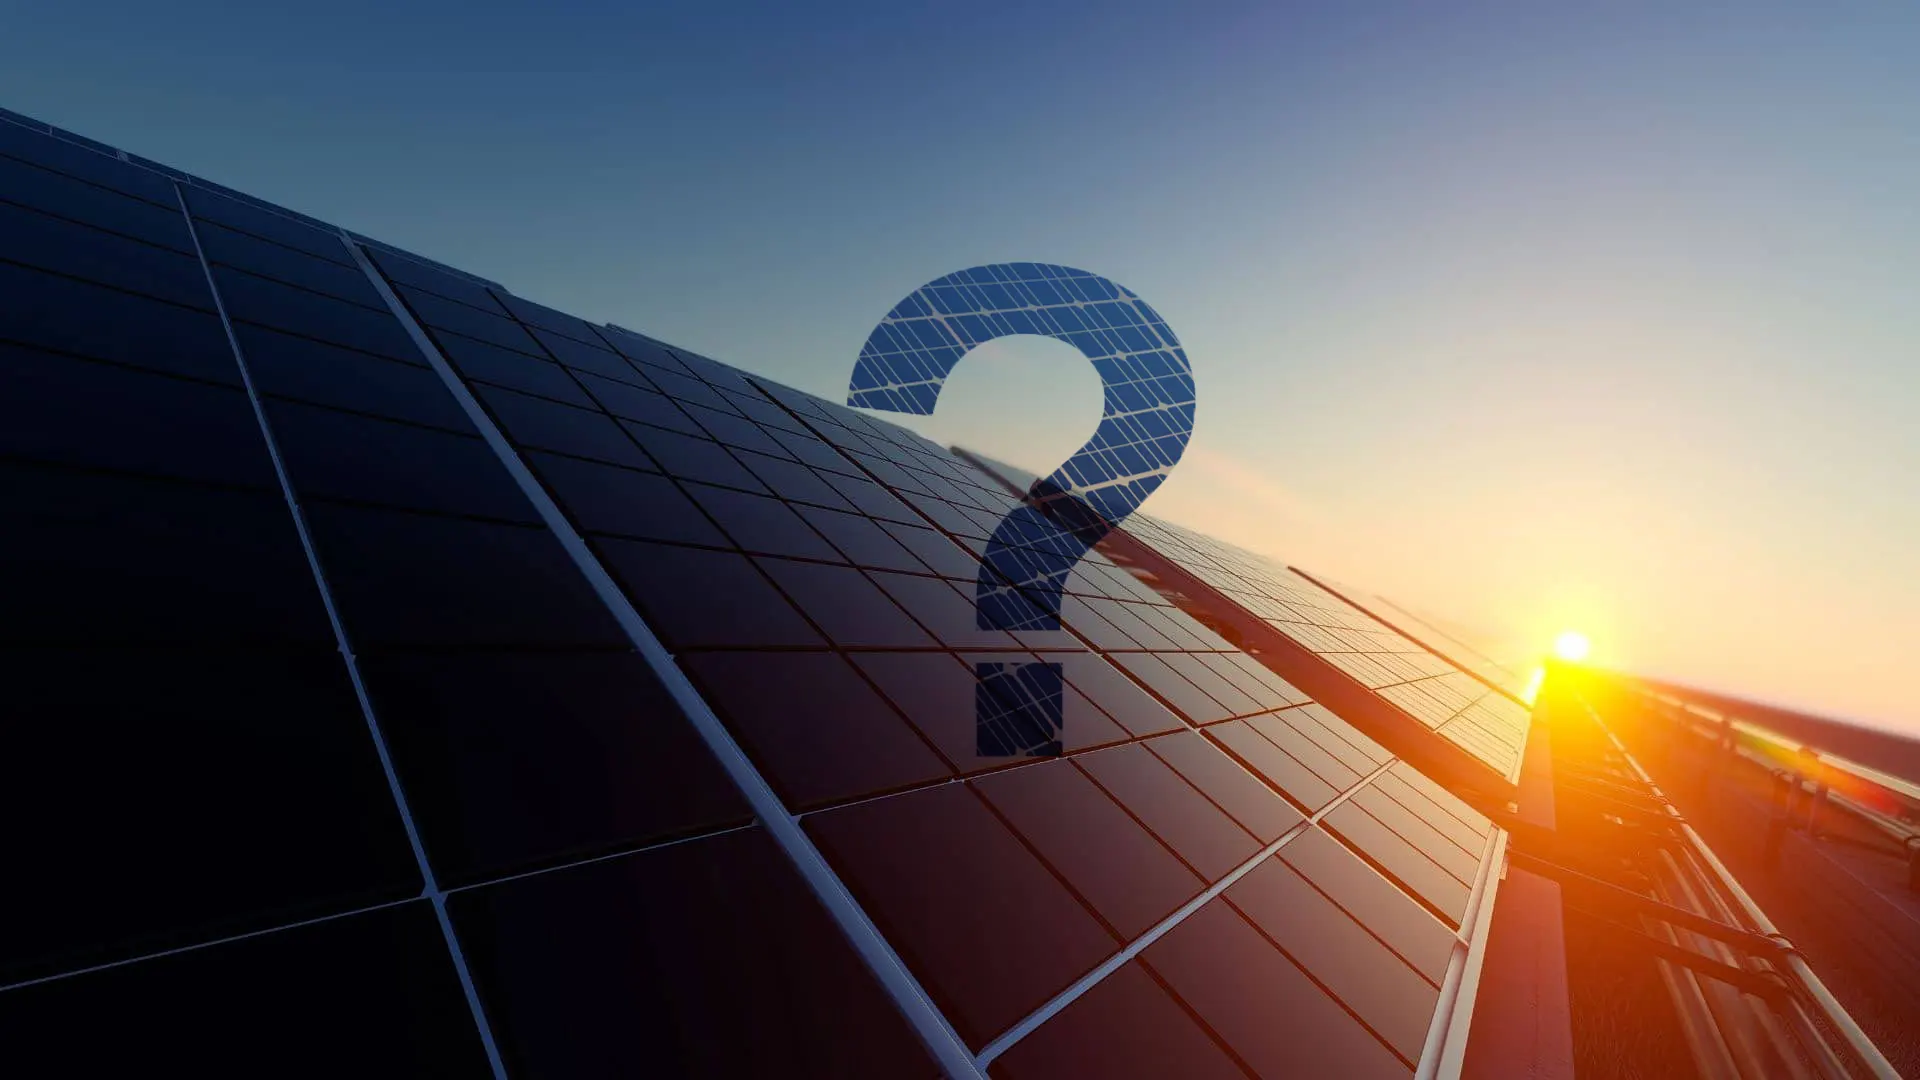 Scopri di più sull'articolo Απαντήσεις στις πέντε πιο συχνές ερωτήσεις φωτοβολταϊκών